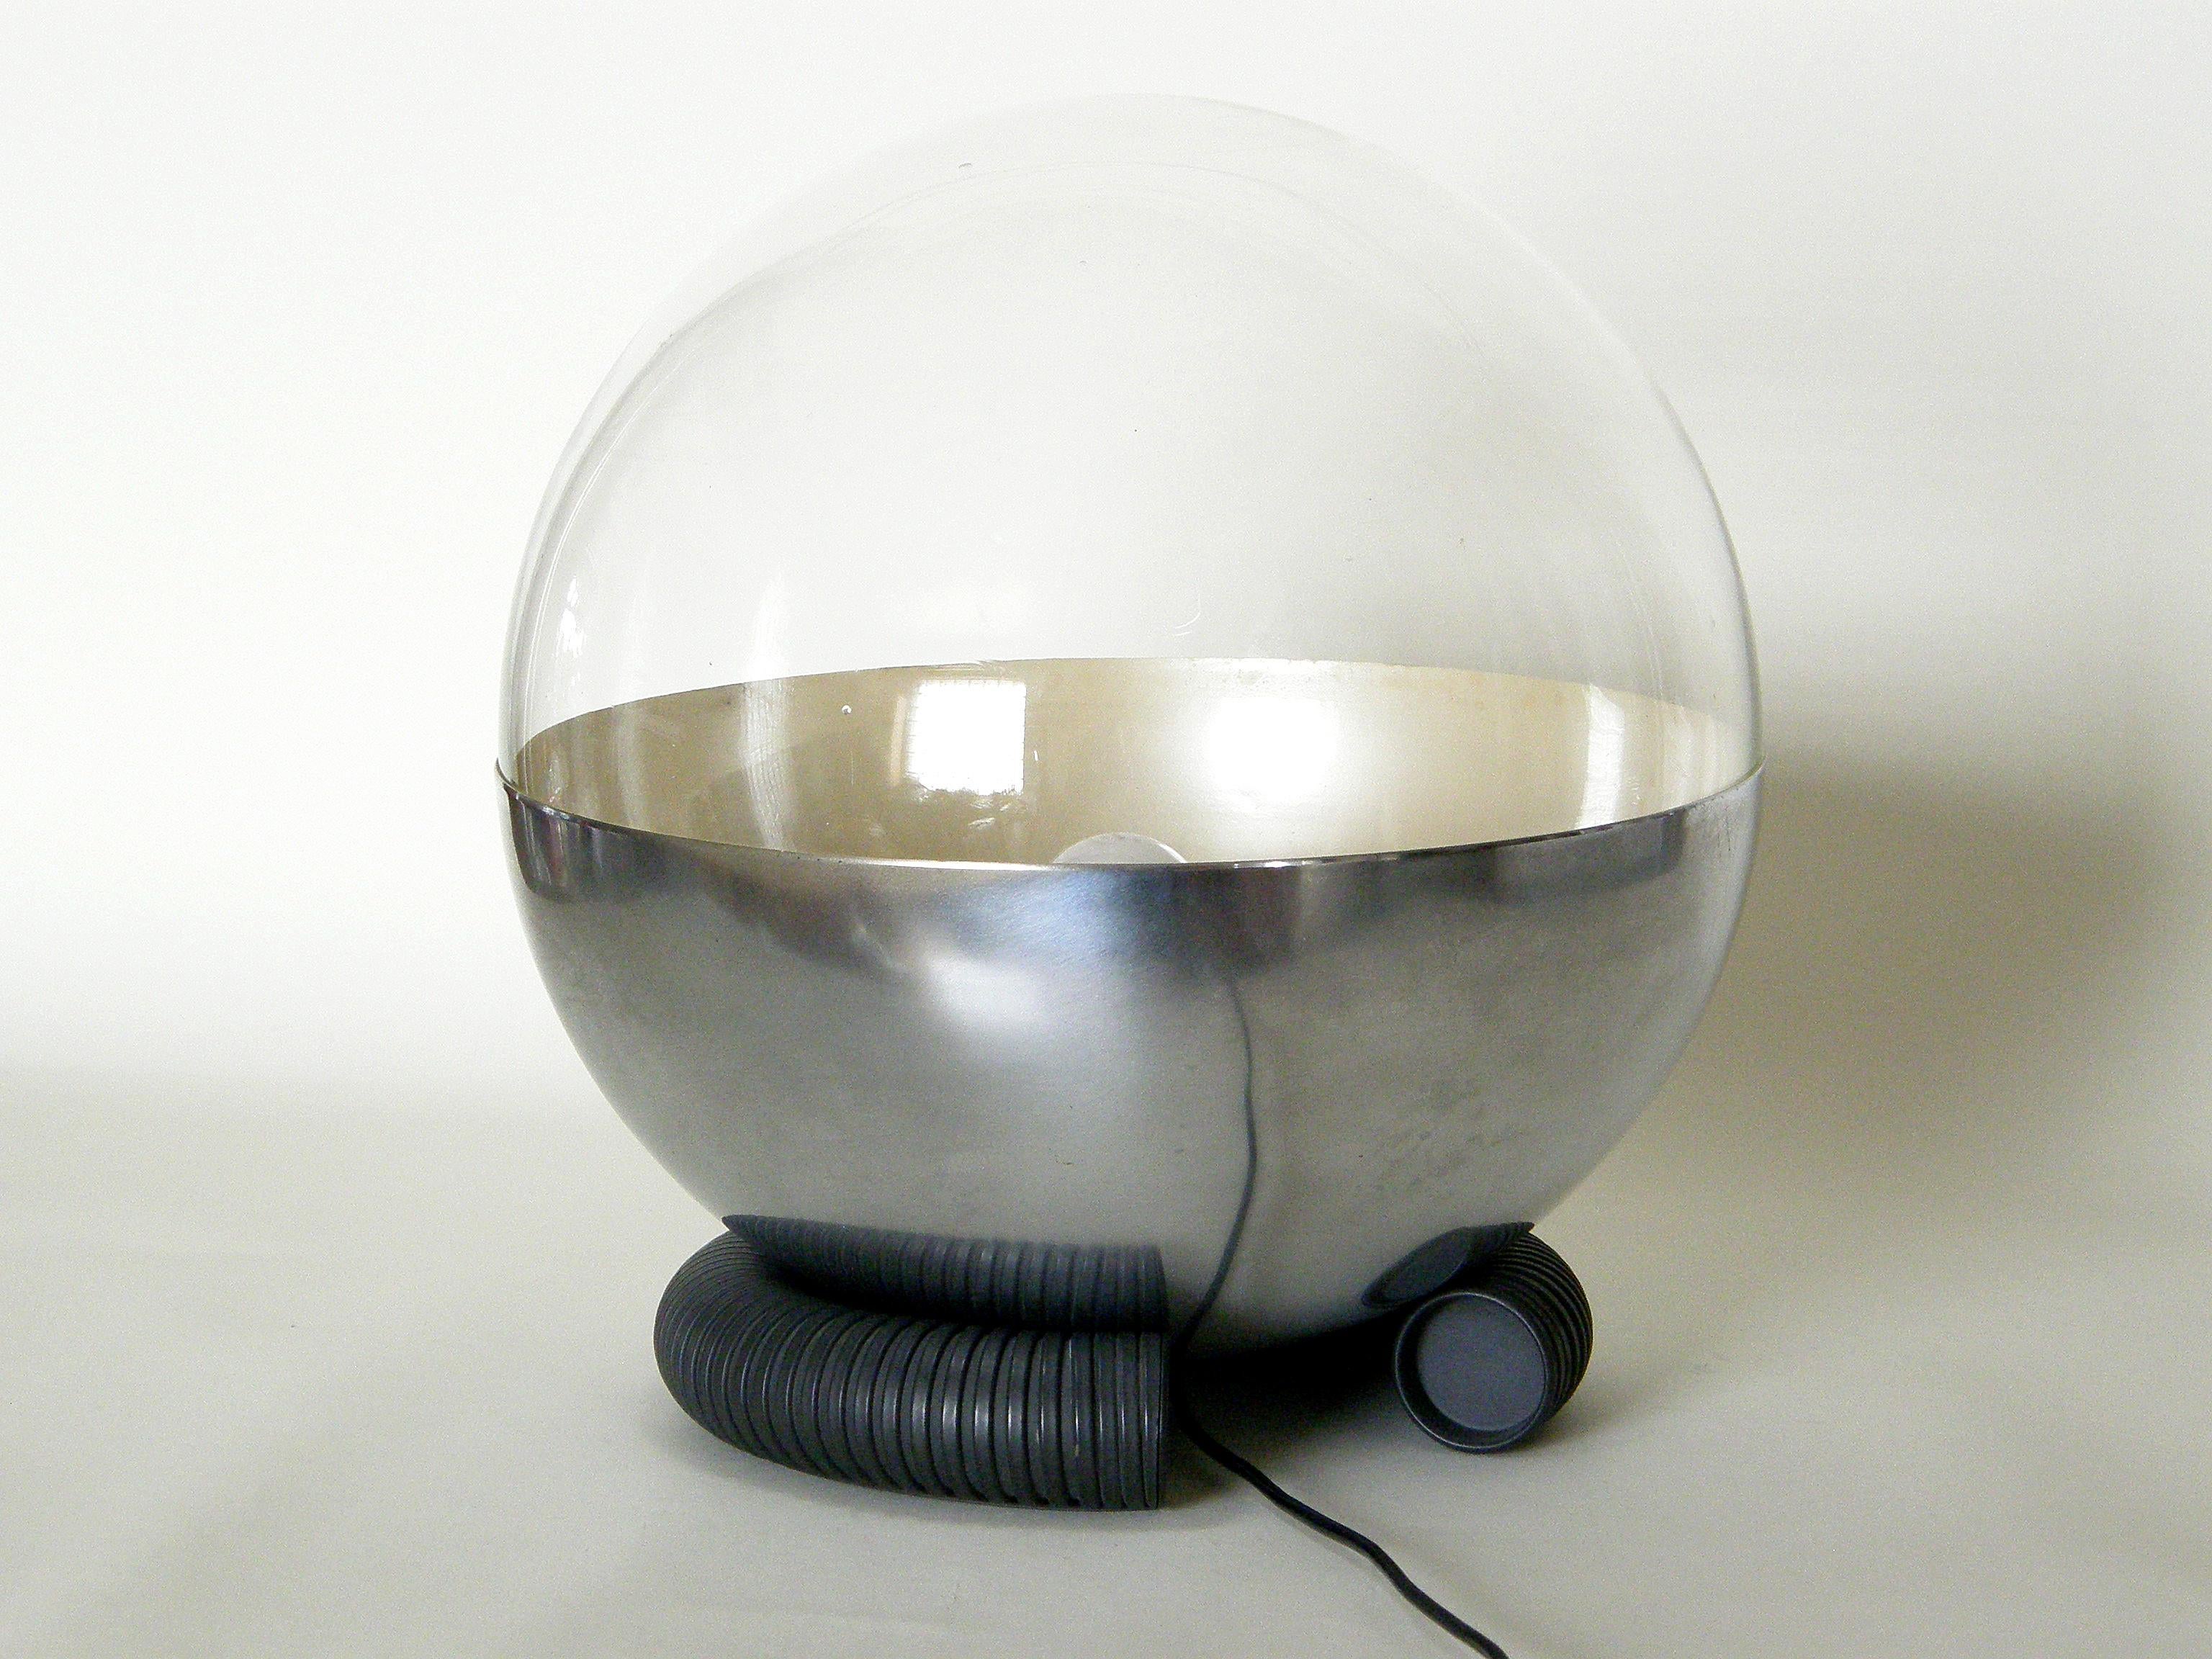 Italian Gino Sarfatti Adjustable Table Lamp for Arteluce Model Number 598, circa 1965